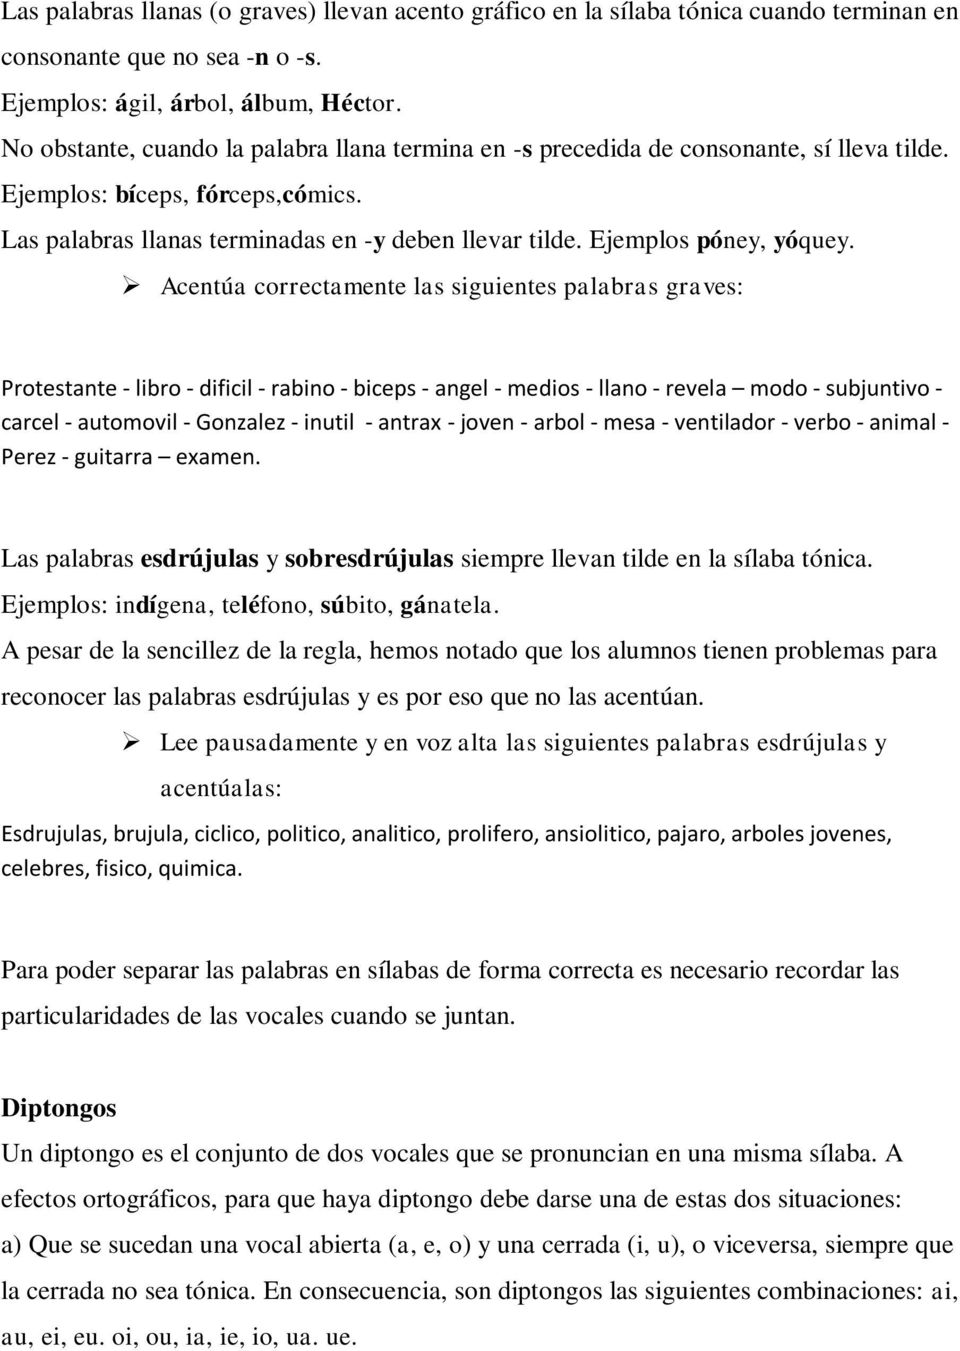 CENTRO DE ESTUDIOS UNIVERSITARIOS ARKOS. Cuadernillo de ortografía - PDF  Descargar libre